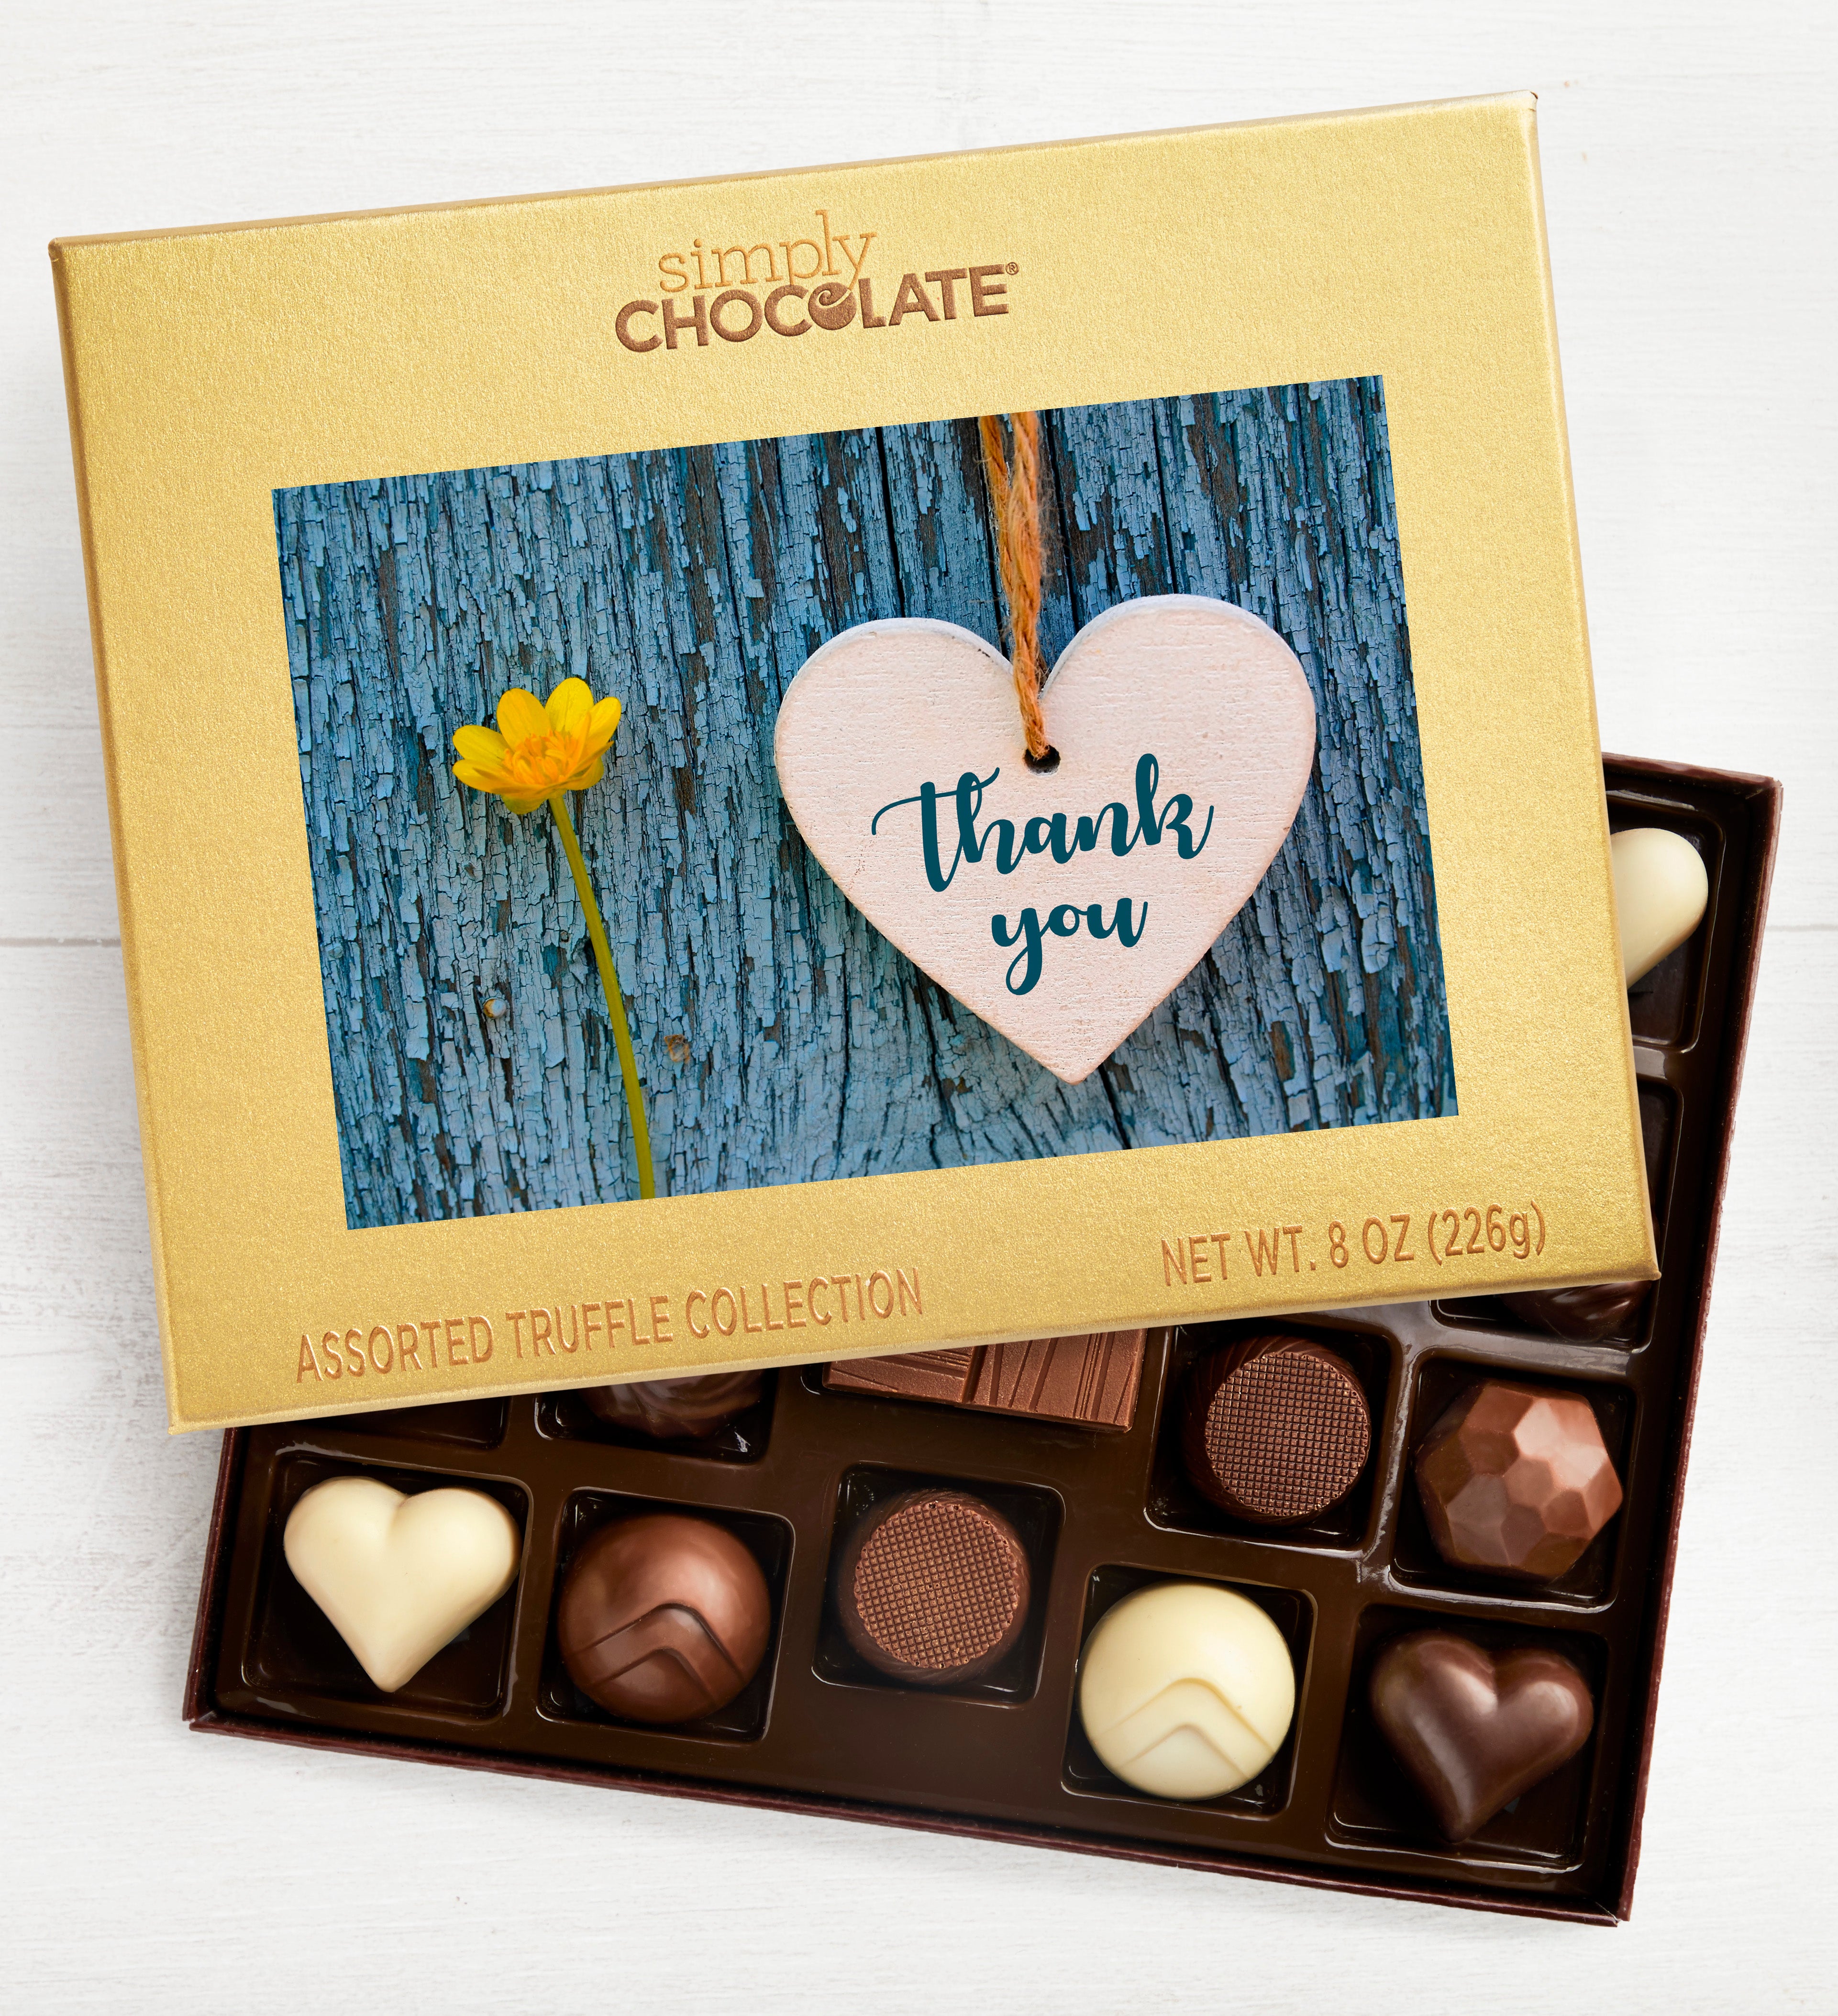 thank you chocolates